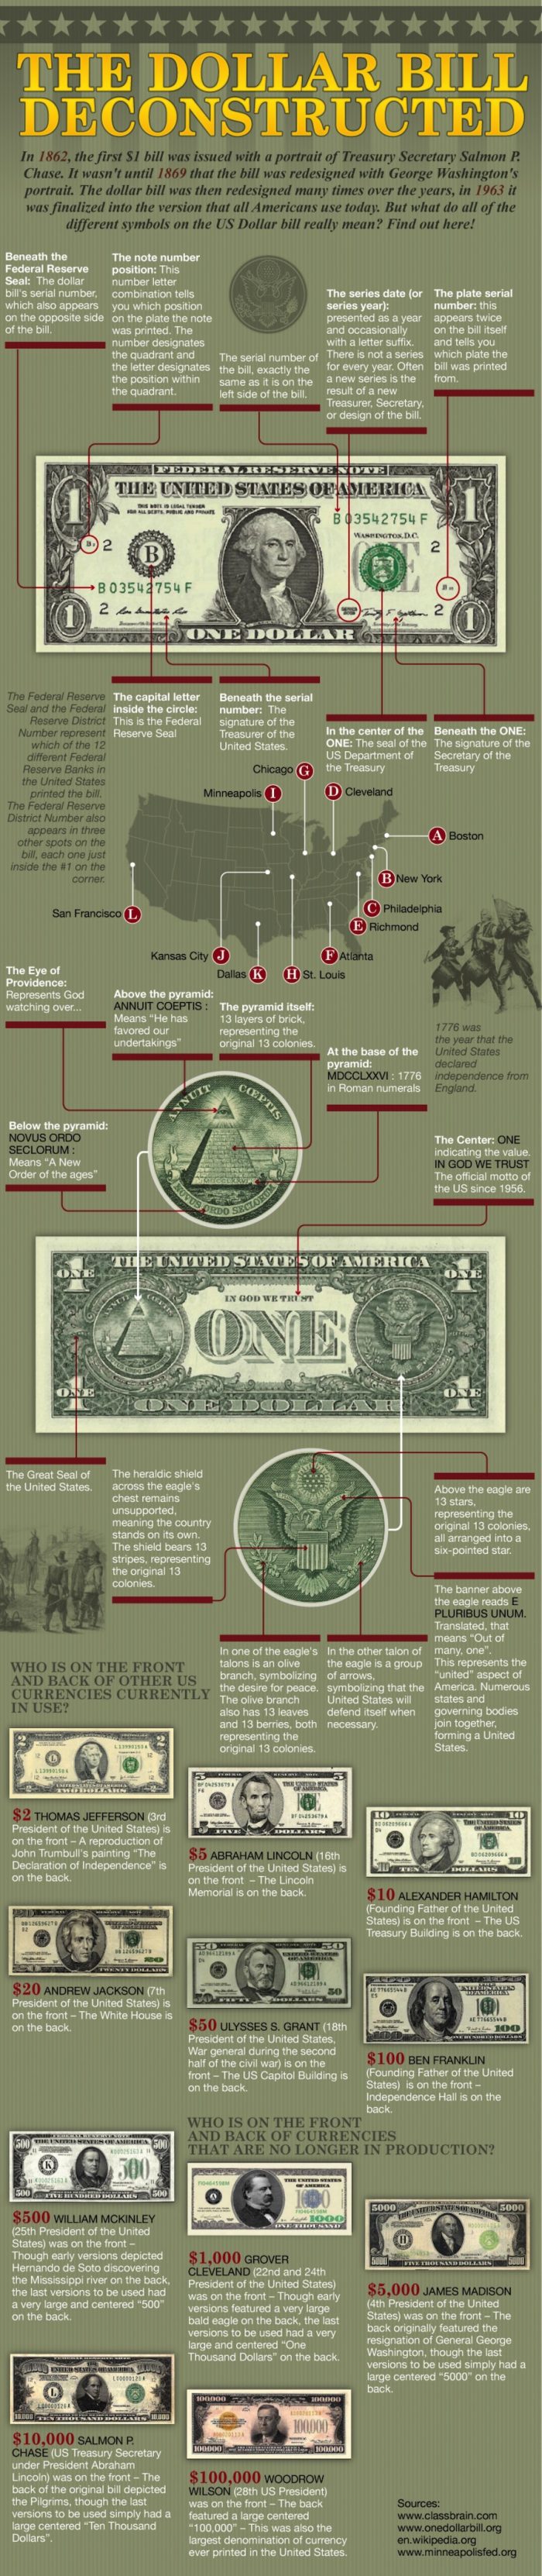 the dollar bill deconstructed